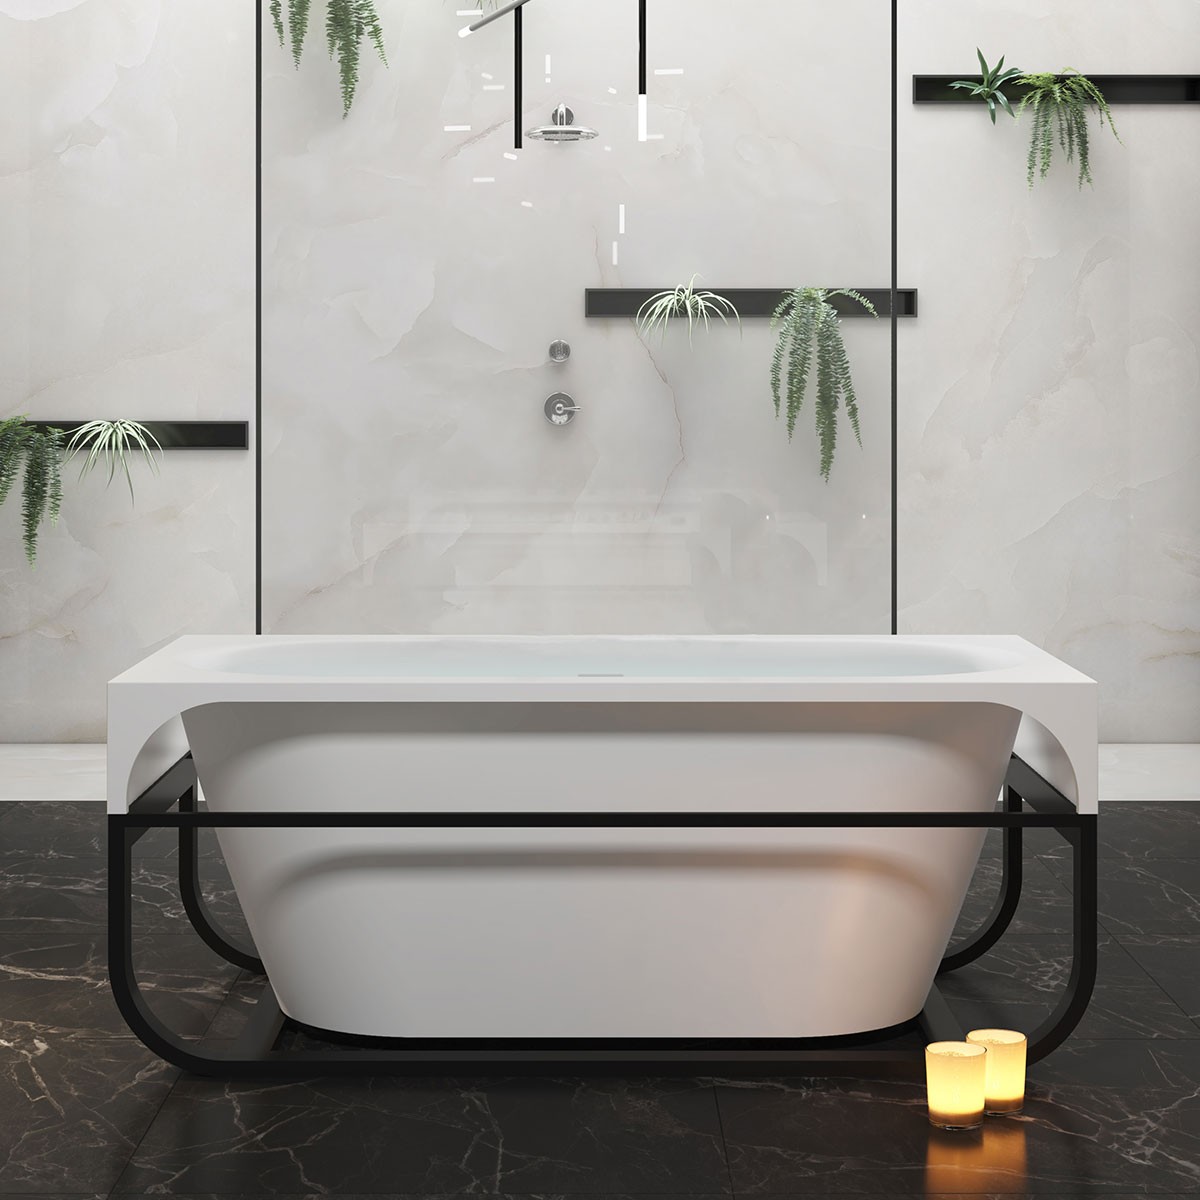 BATHPRO 59 In High-end Freestanding Bathtub - Acrylic Matte White (DK-MF-126575)